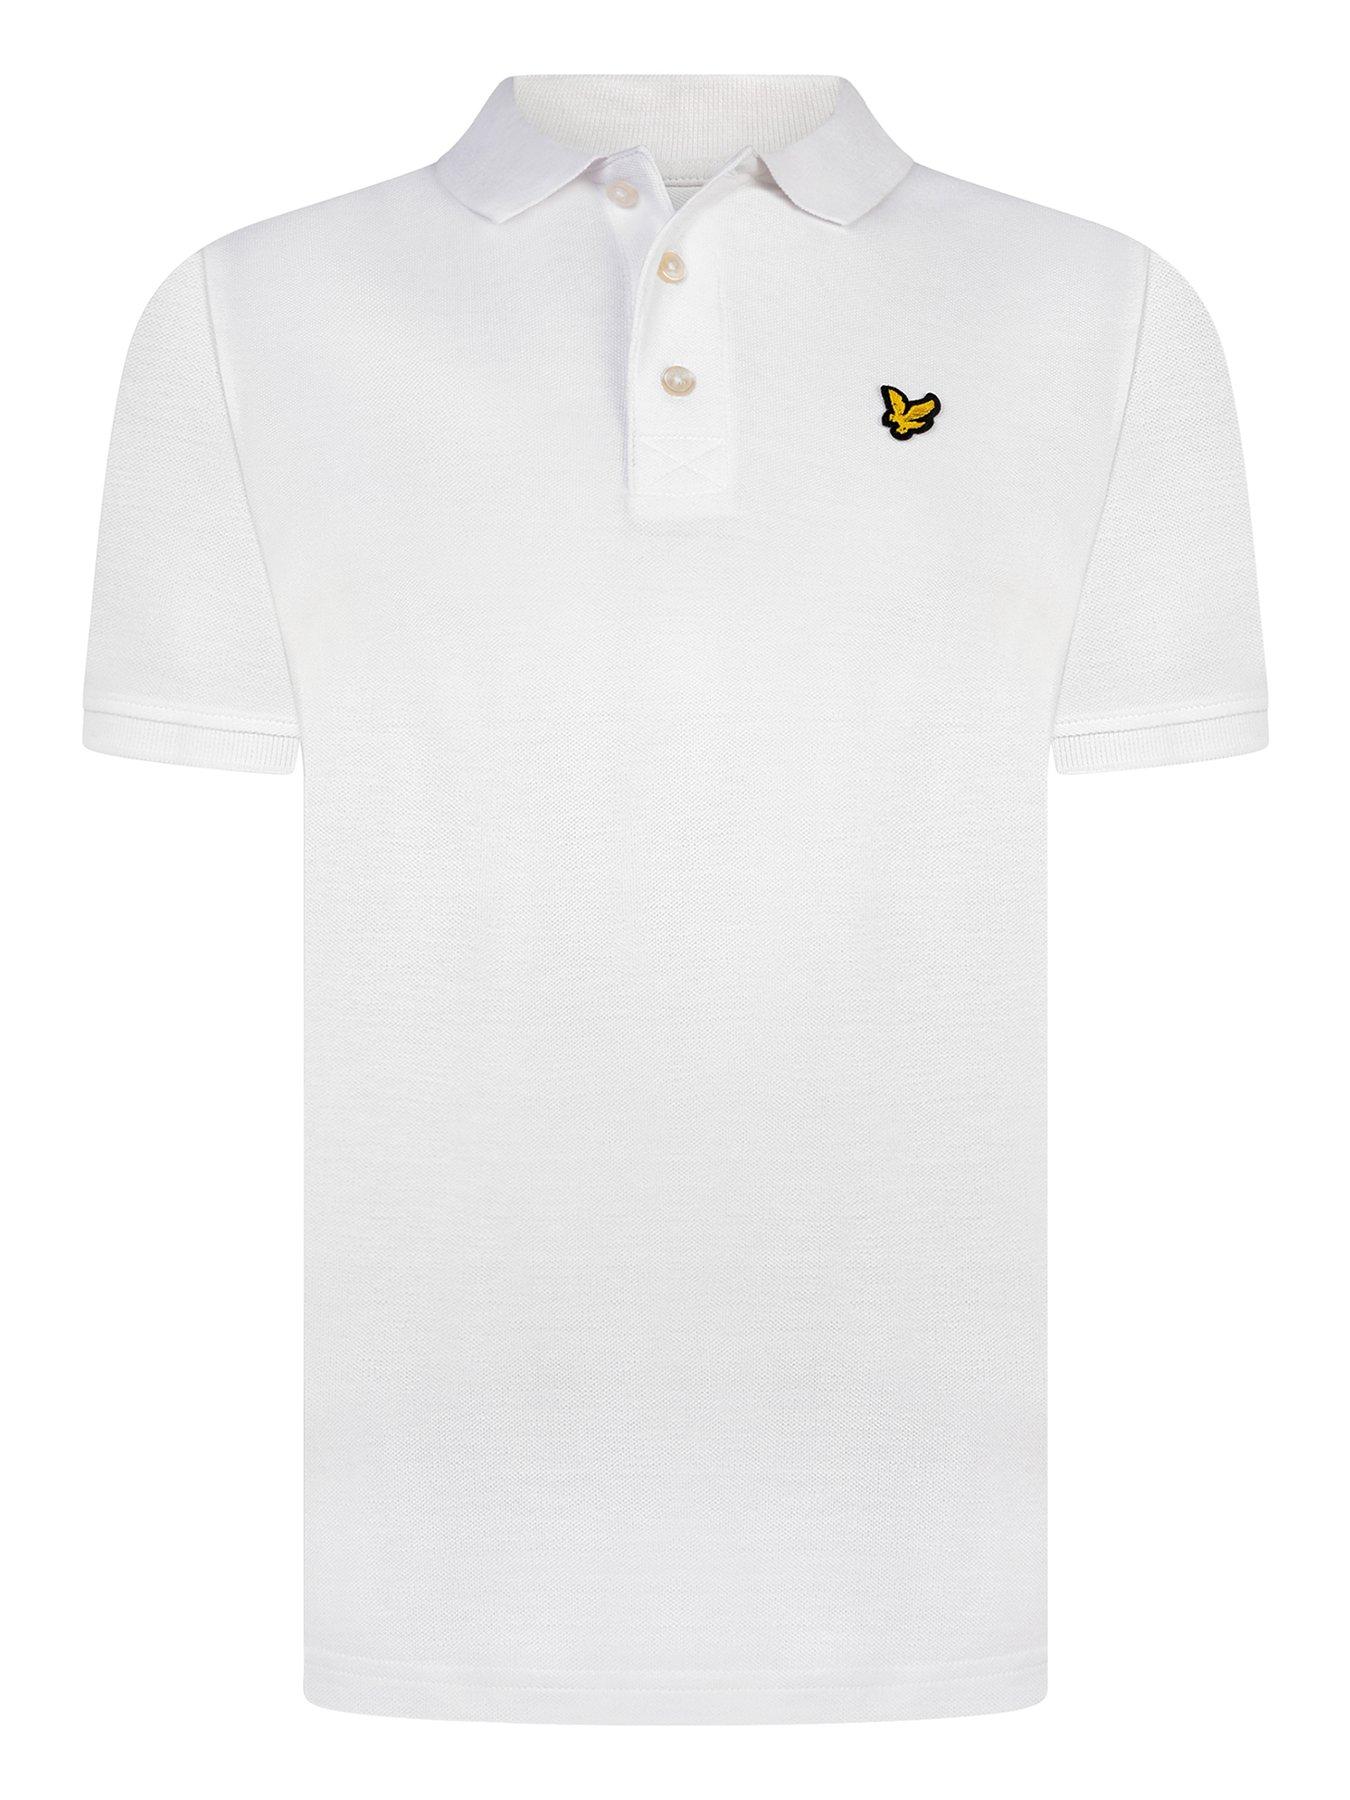 Lyle & Scott Boys Classic Short Sleeve Polo Shirt - White | very.co.uk